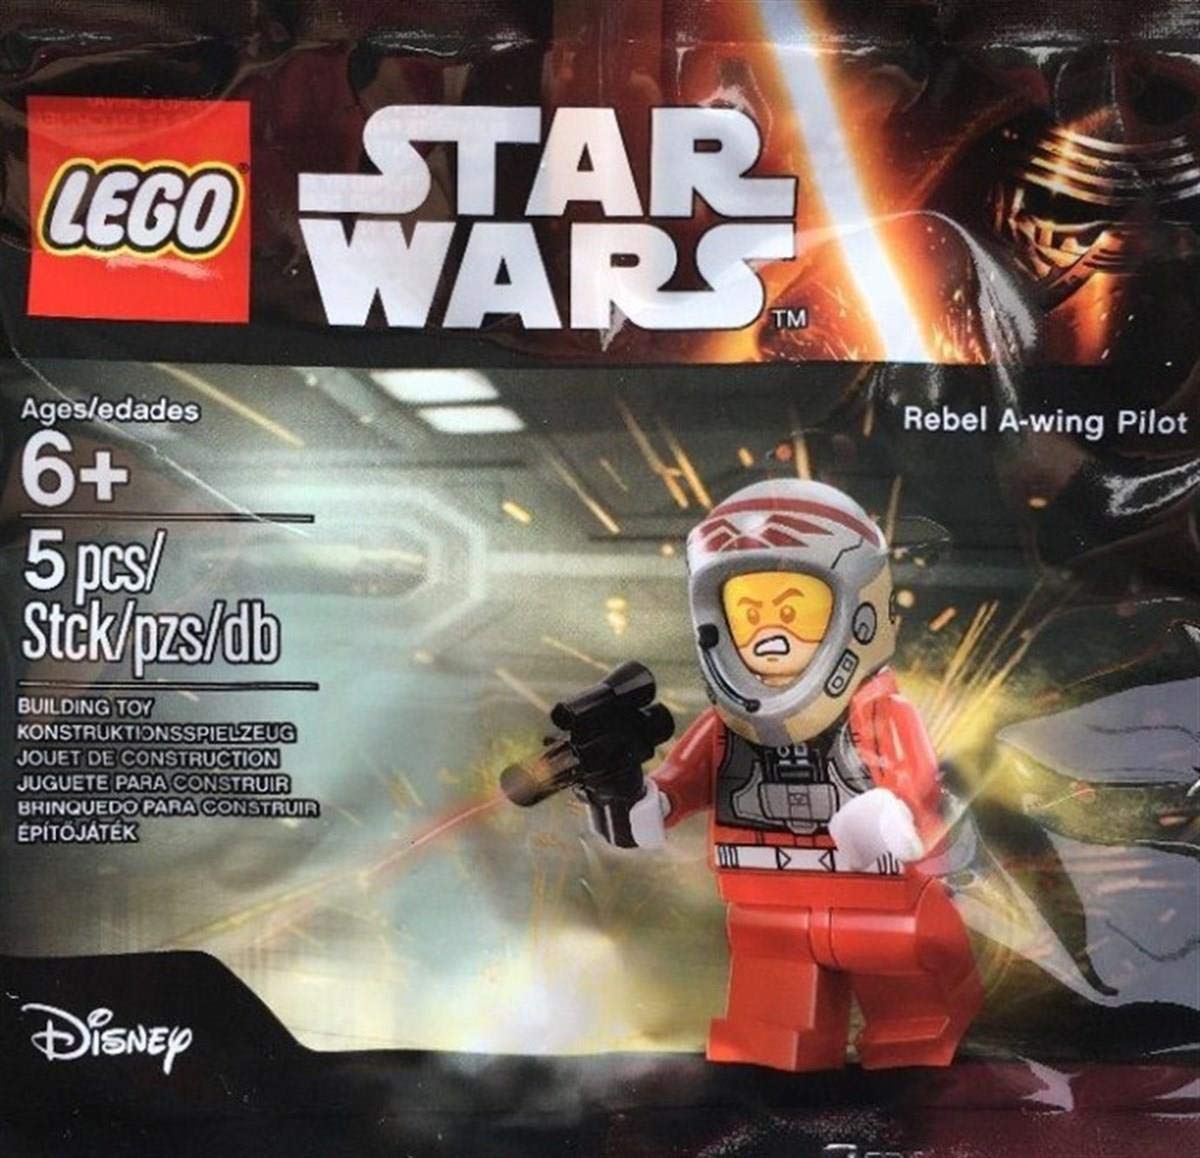 LEGO Star Wars Rebel A-wing Pilot 5004408